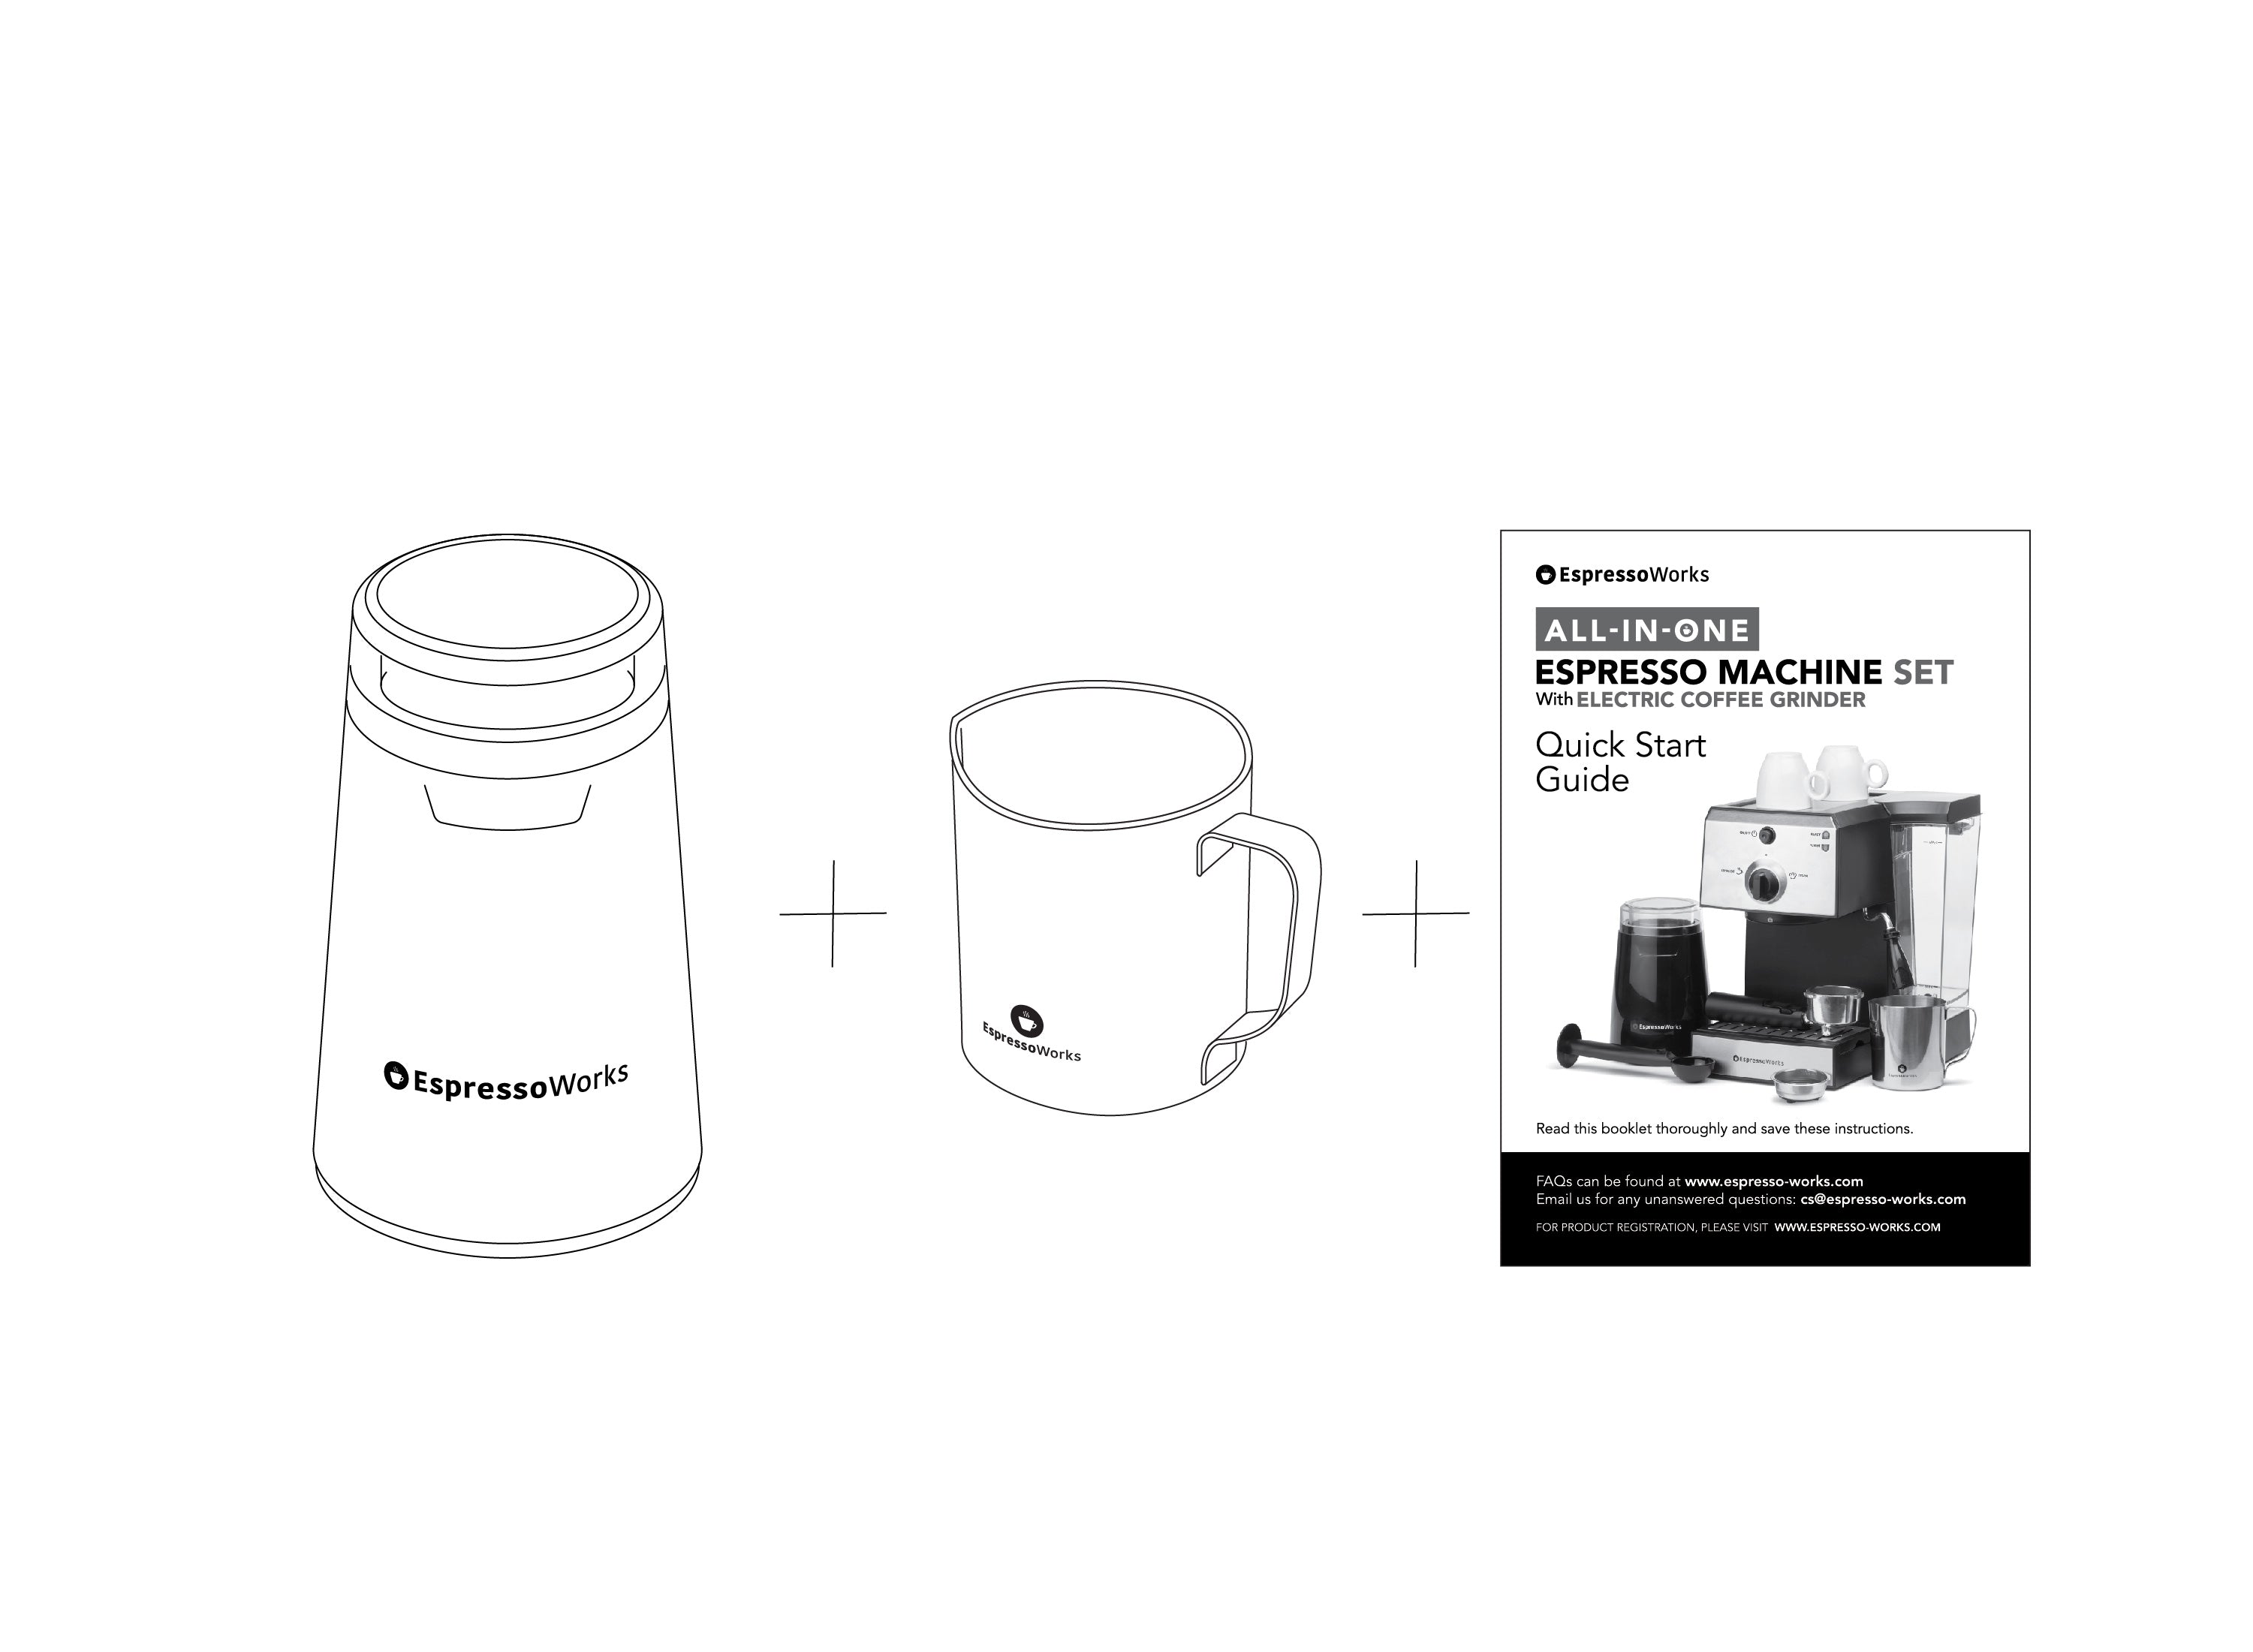 Troubleshooting acidity of espresso - EspressoWorks 15-bar Espresso Machine